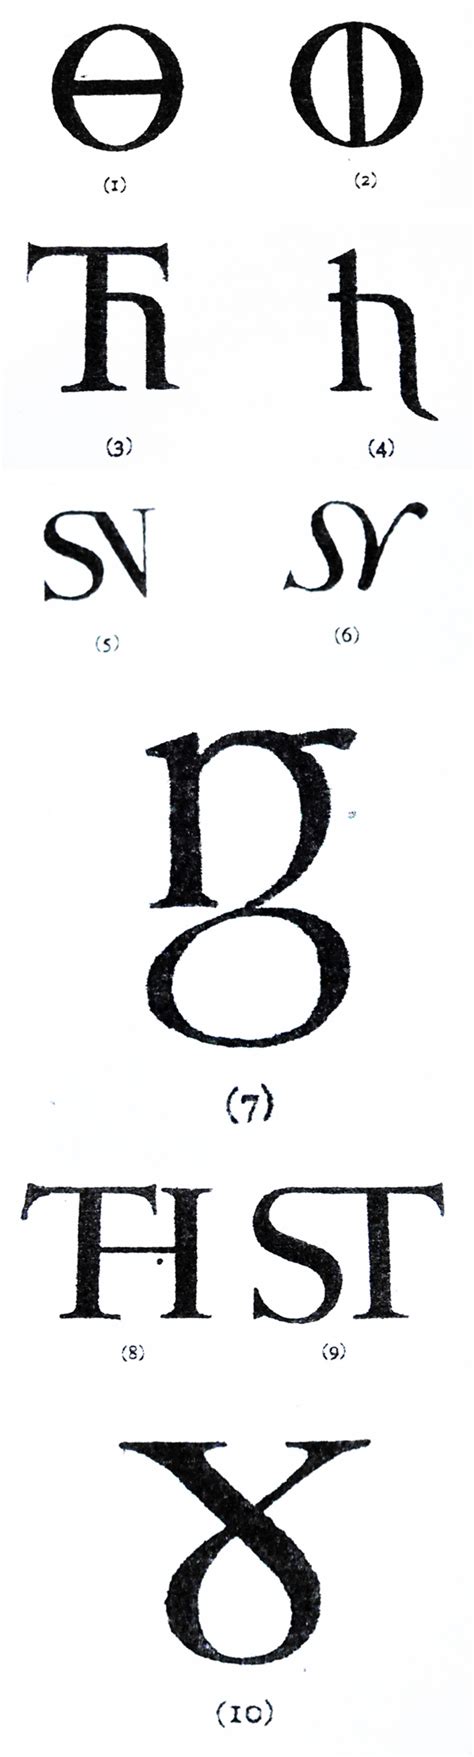 Alphabet 27th Letter “et” Was The 27th Letter Of The Alphabet